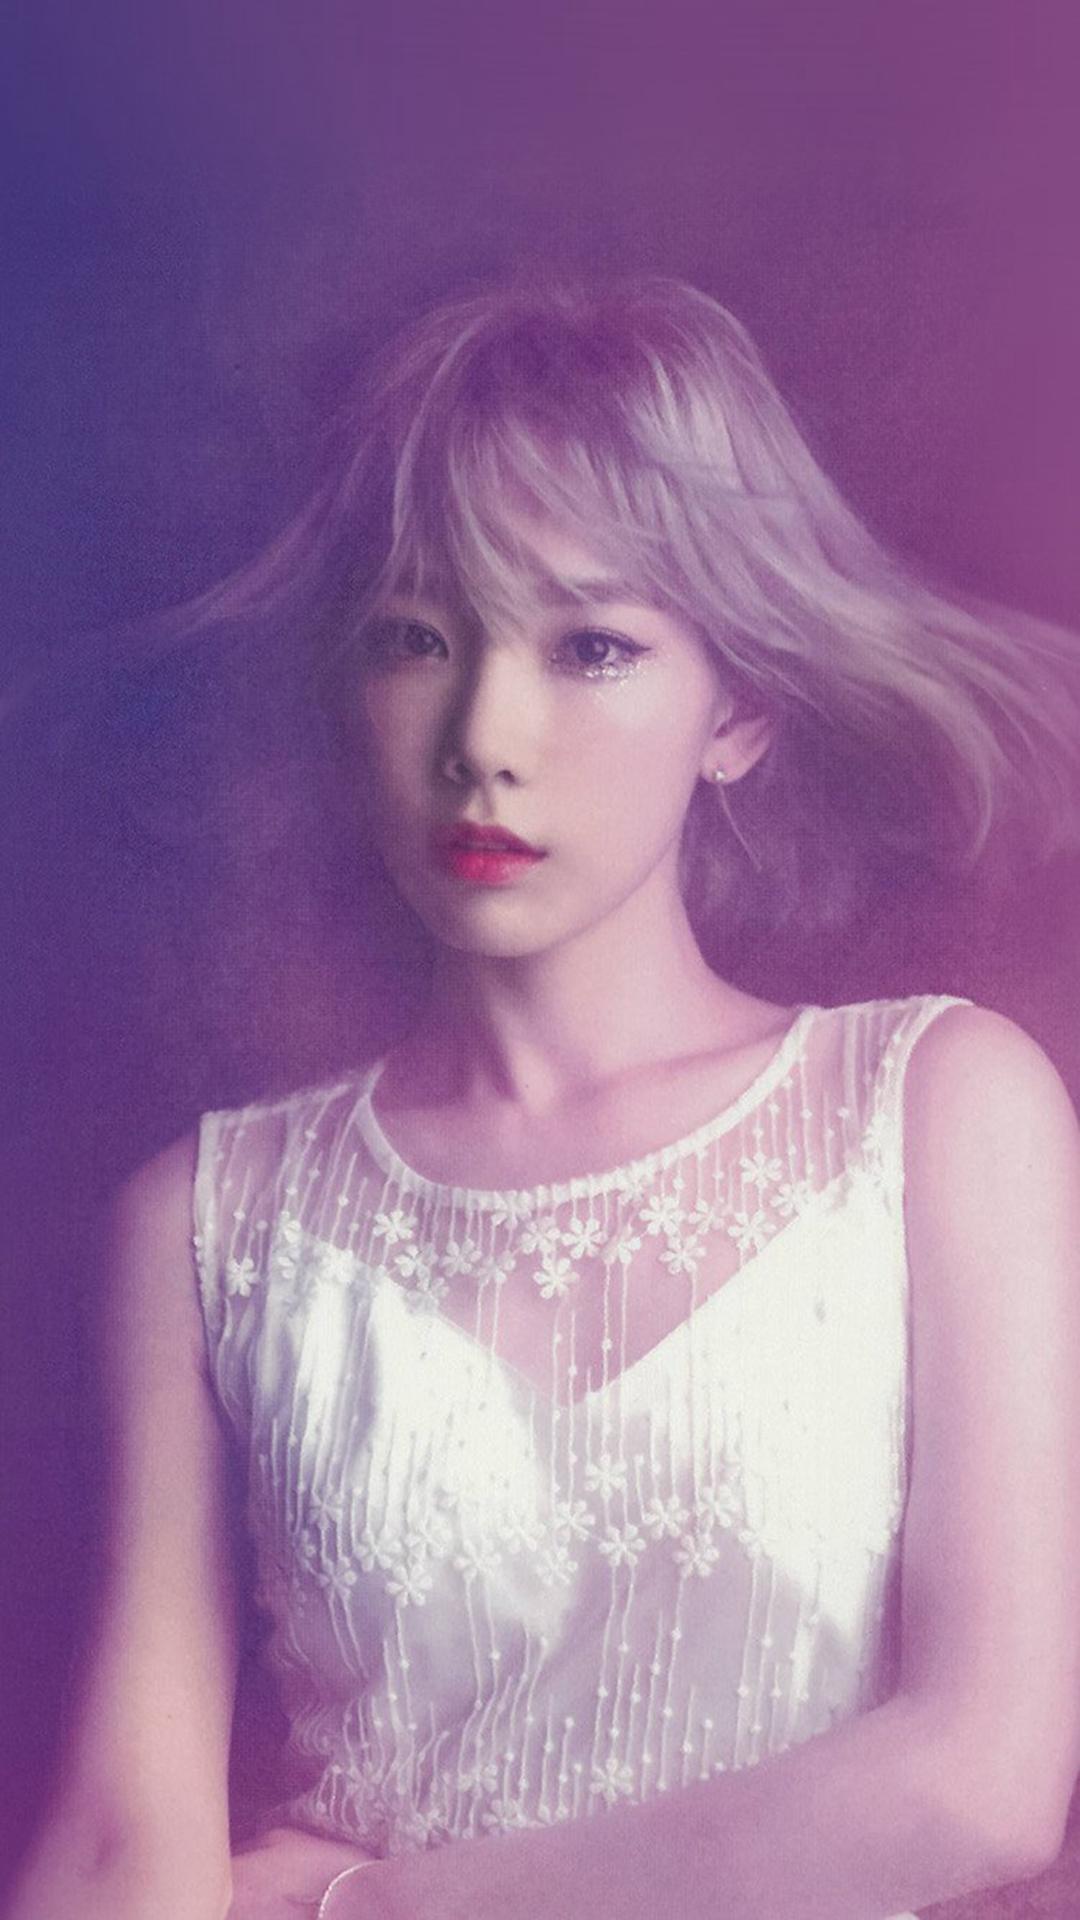 Taeyeon Snsd Kpop Girl Purple Pink iPhone 8 Wallpaper Free